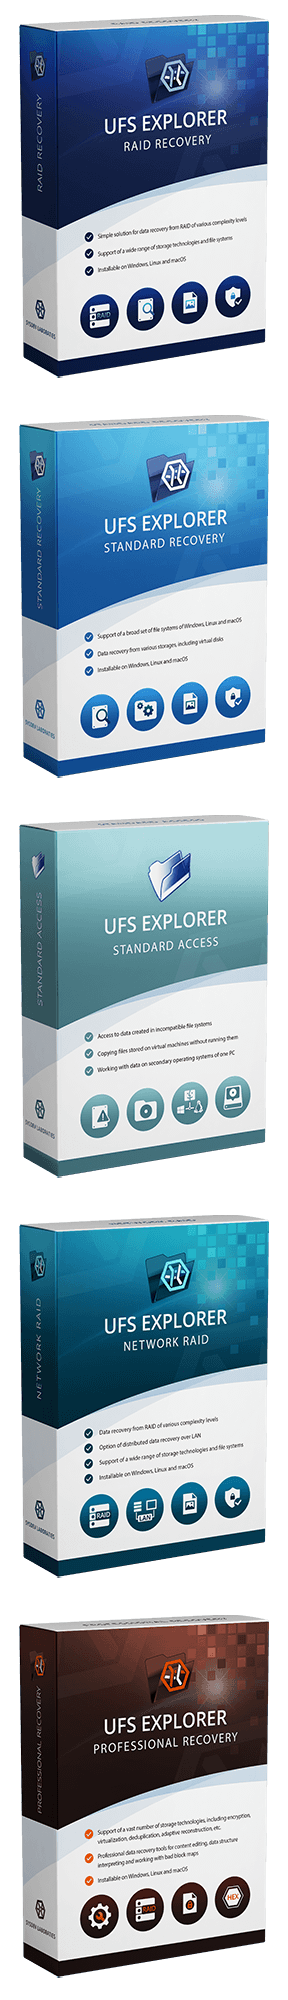 UFS Explorer Network RAID